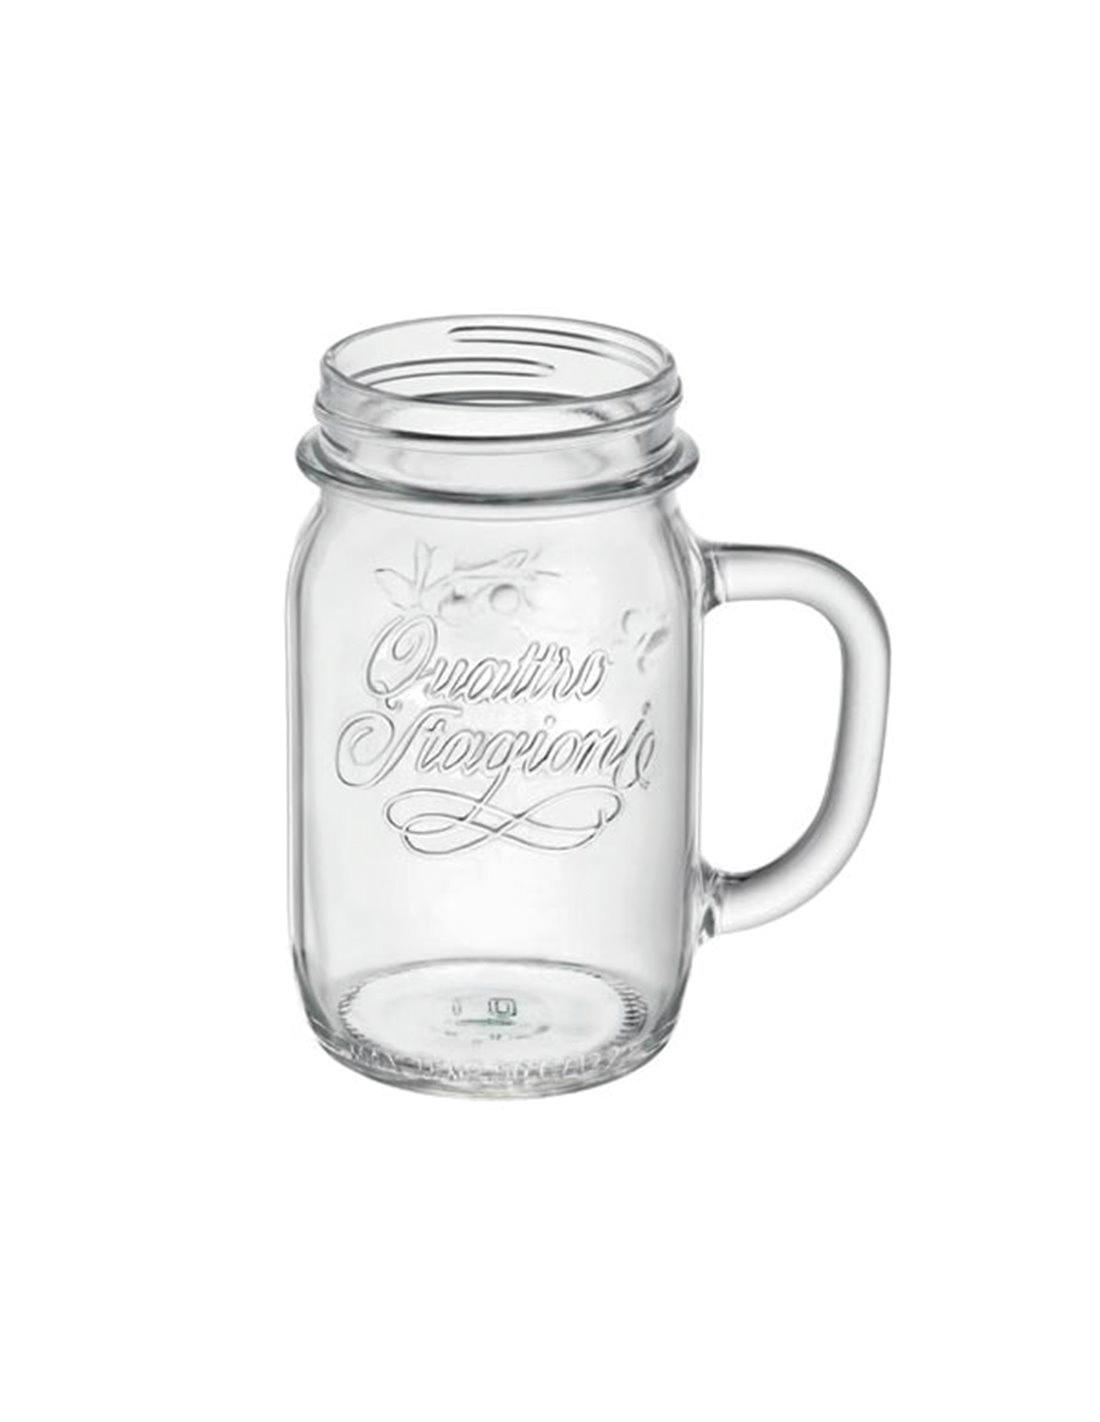 Quattro Stagioni jar with handle